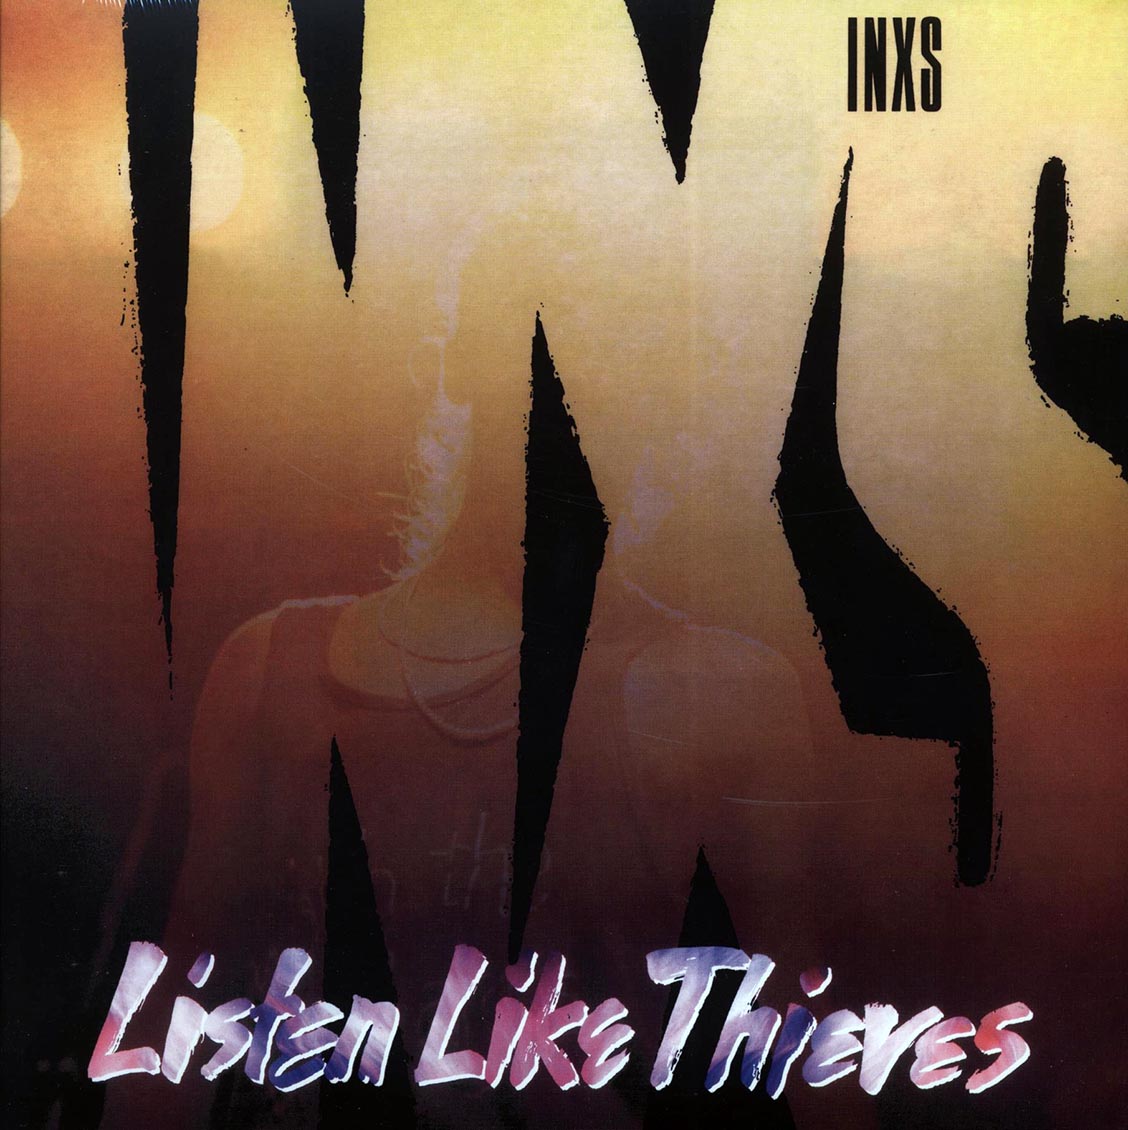 INXS - Listen Like Thieves [2014 Reissue 180G] [New VInyl Record LP]